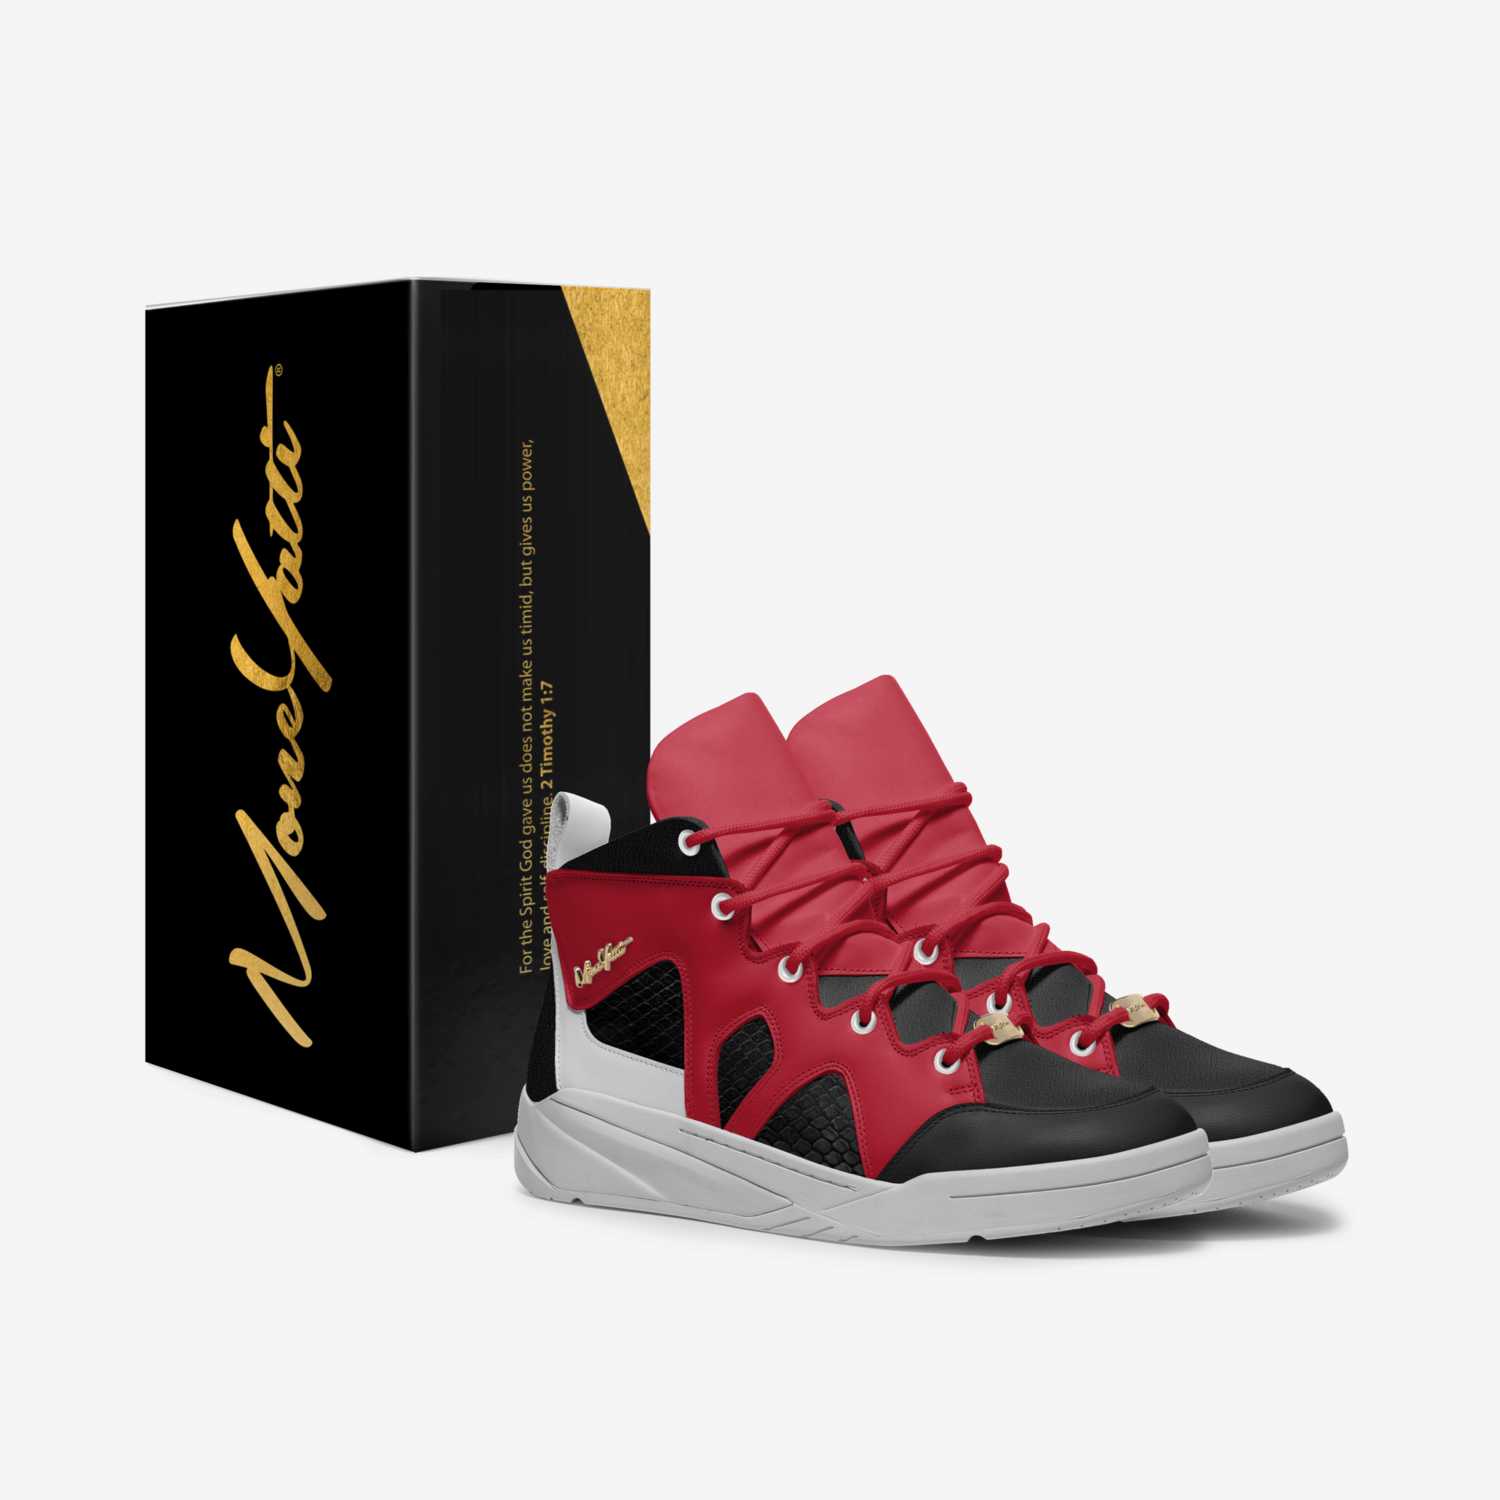 MONEYATTI TAKEOFF 004 custom made in Italy shoes by Moneyatti Brand | Box view